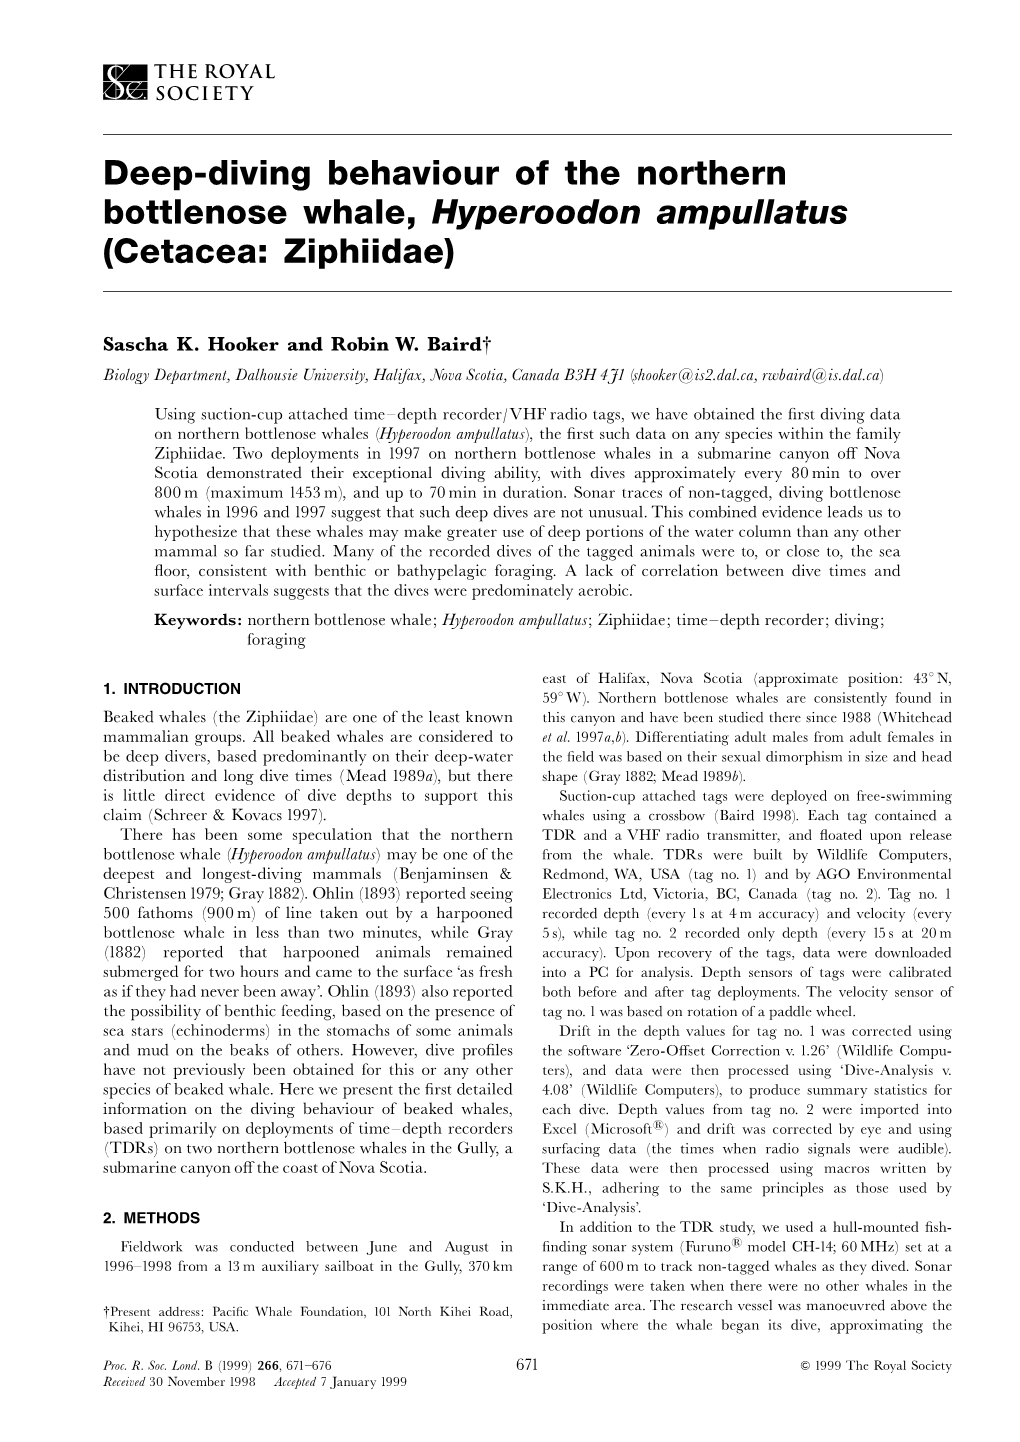 Deep-Diving Behaviour of the Northern Bottlenose Whale, Hyperoodon Ampullatus (Cetacea: Ziphiidae)